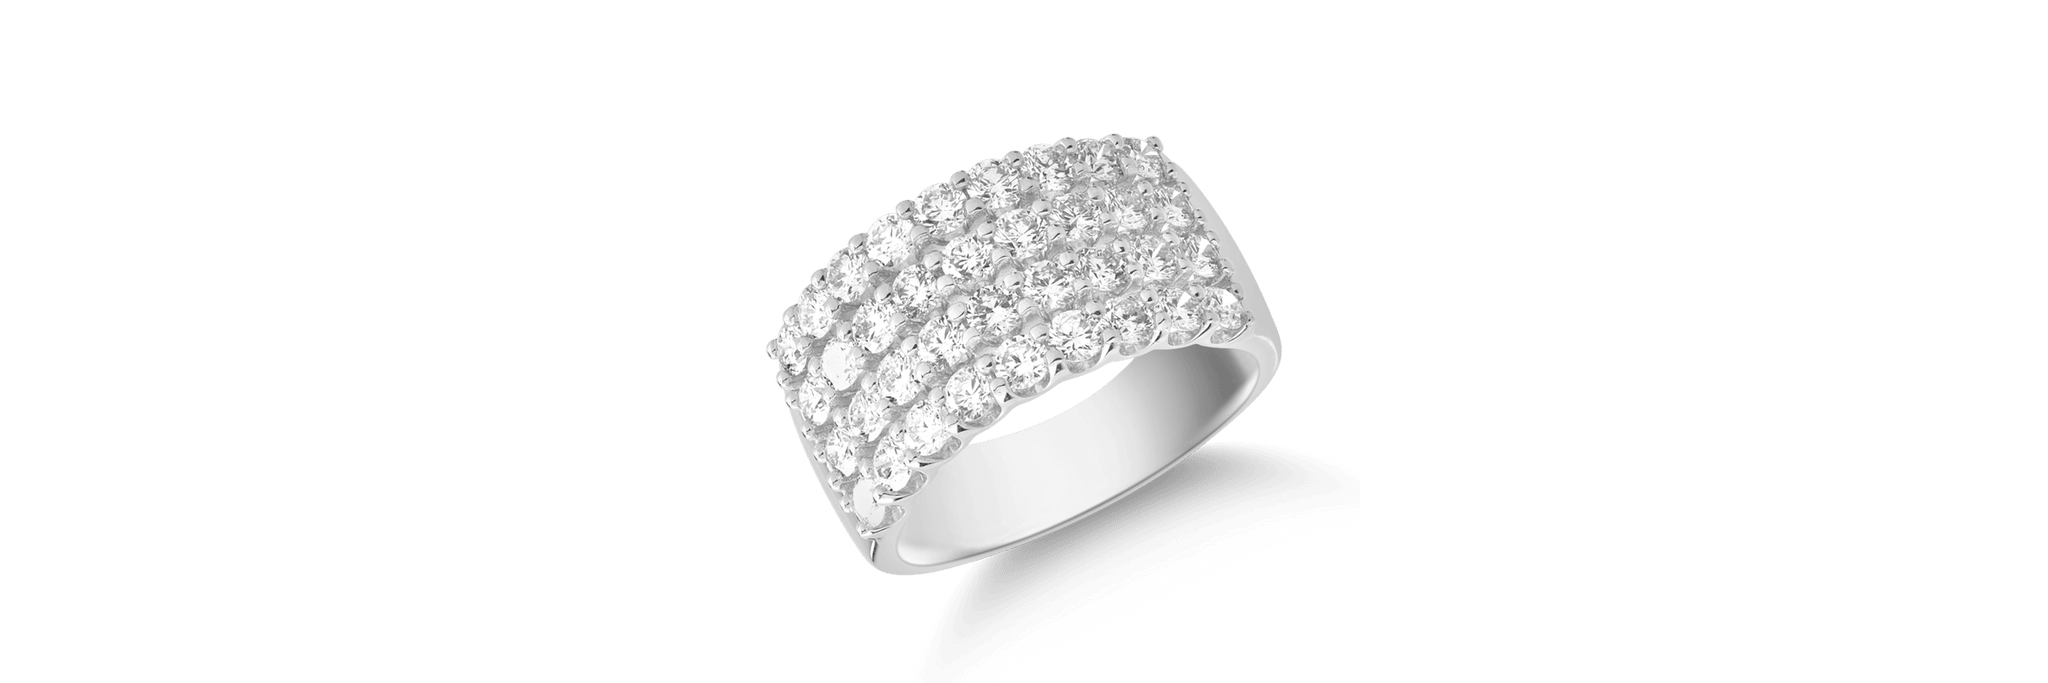 Inel din aur alb de 18K cu diamante de 2ct